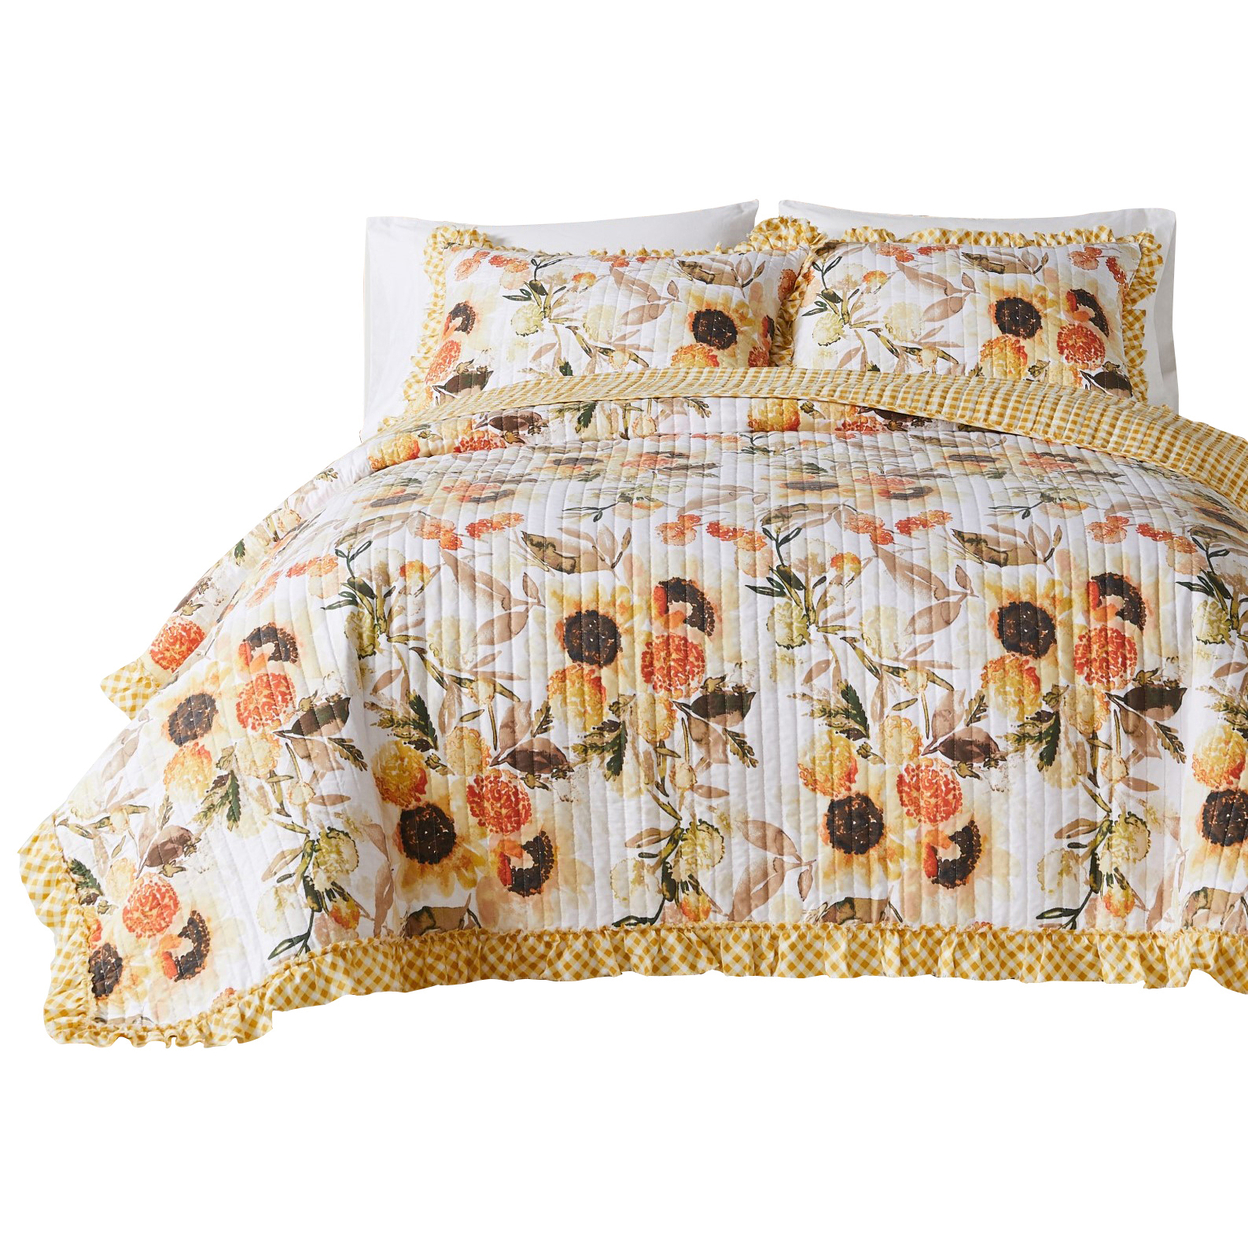 Kelsa 2 Piece Twin Quilt Set With Pillow Sham, Cotton, Ruffled Border, Gold- Saltoro Sherpi